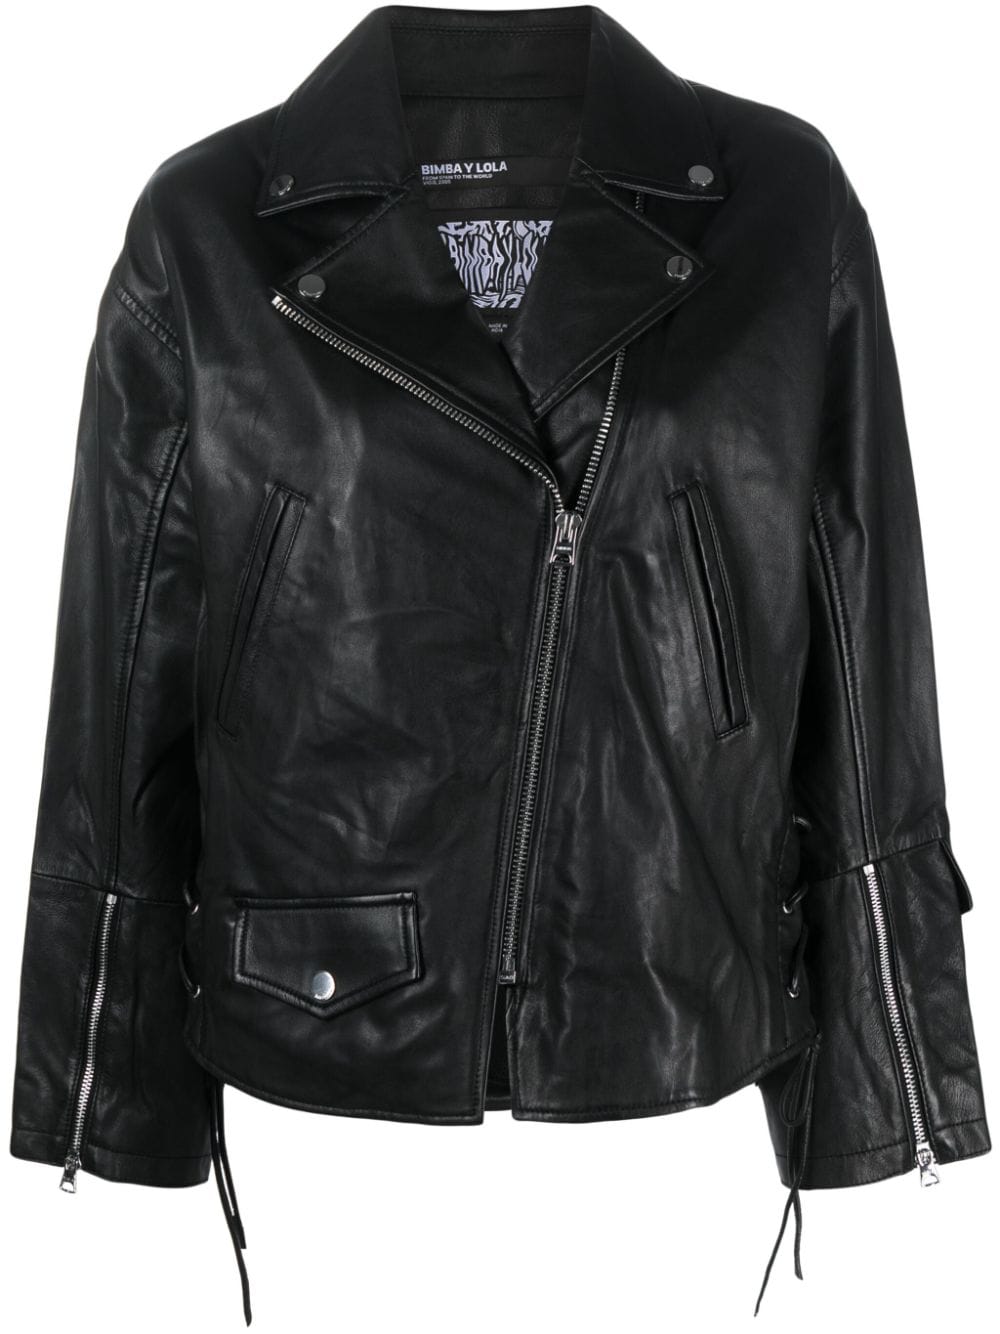 Bimba y Lola leather biker jacket - Black von Bimba y Lola